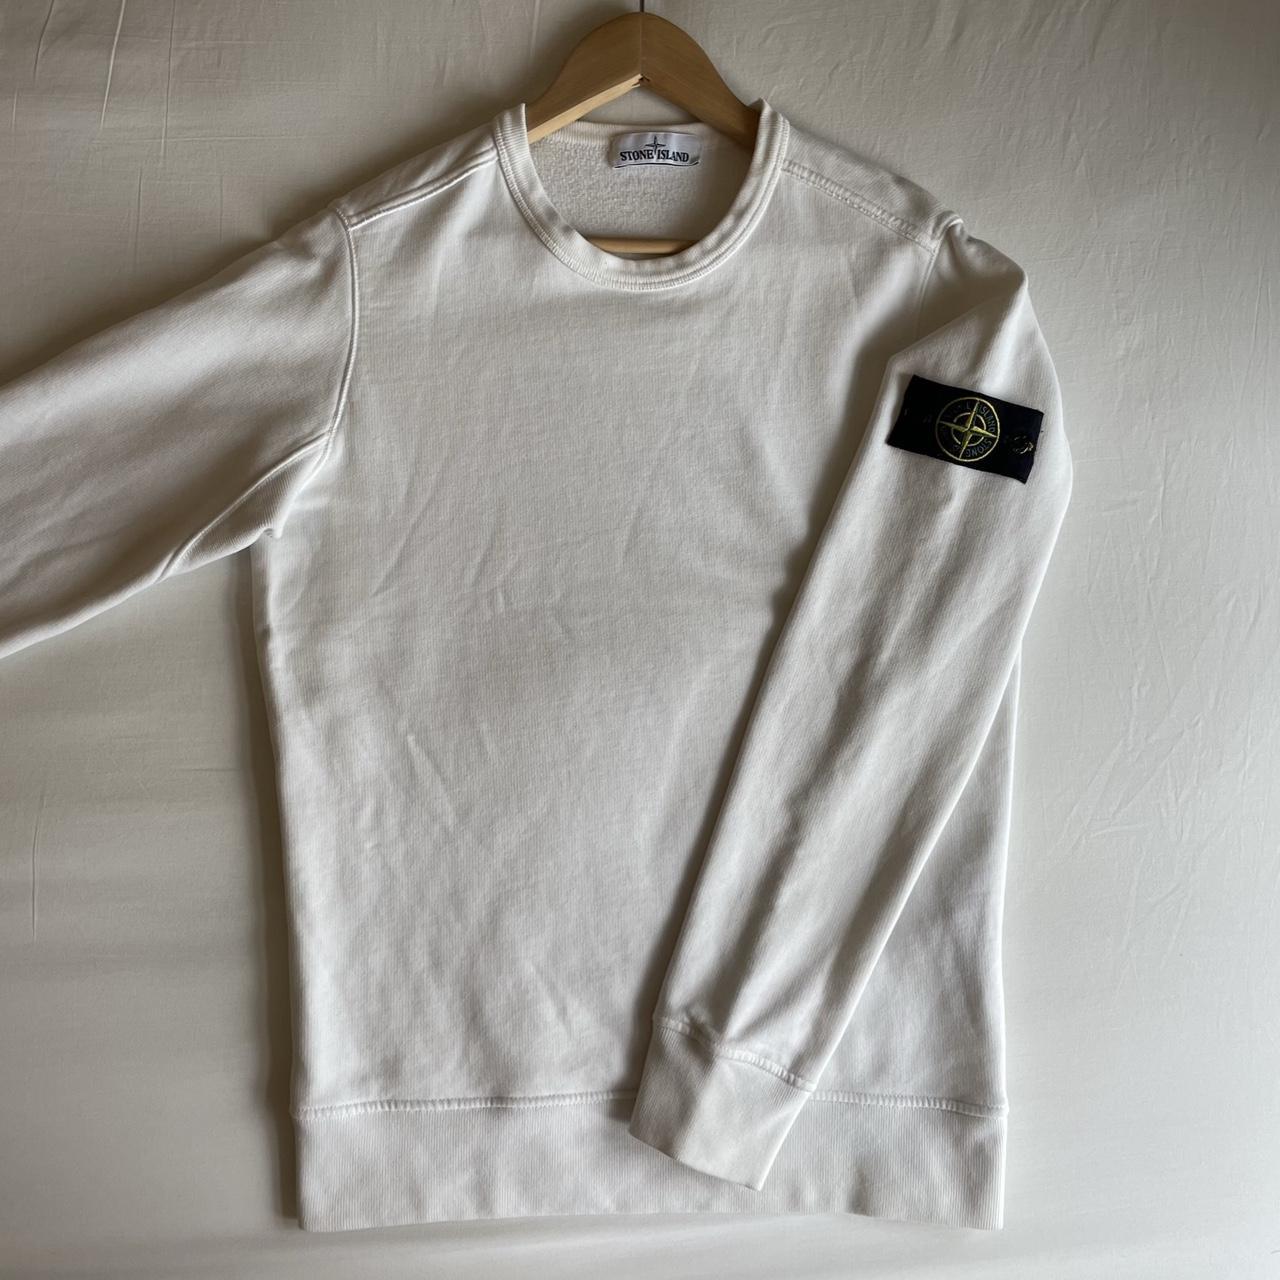 Stone island sweatshirt white small Authentic with... - Depop